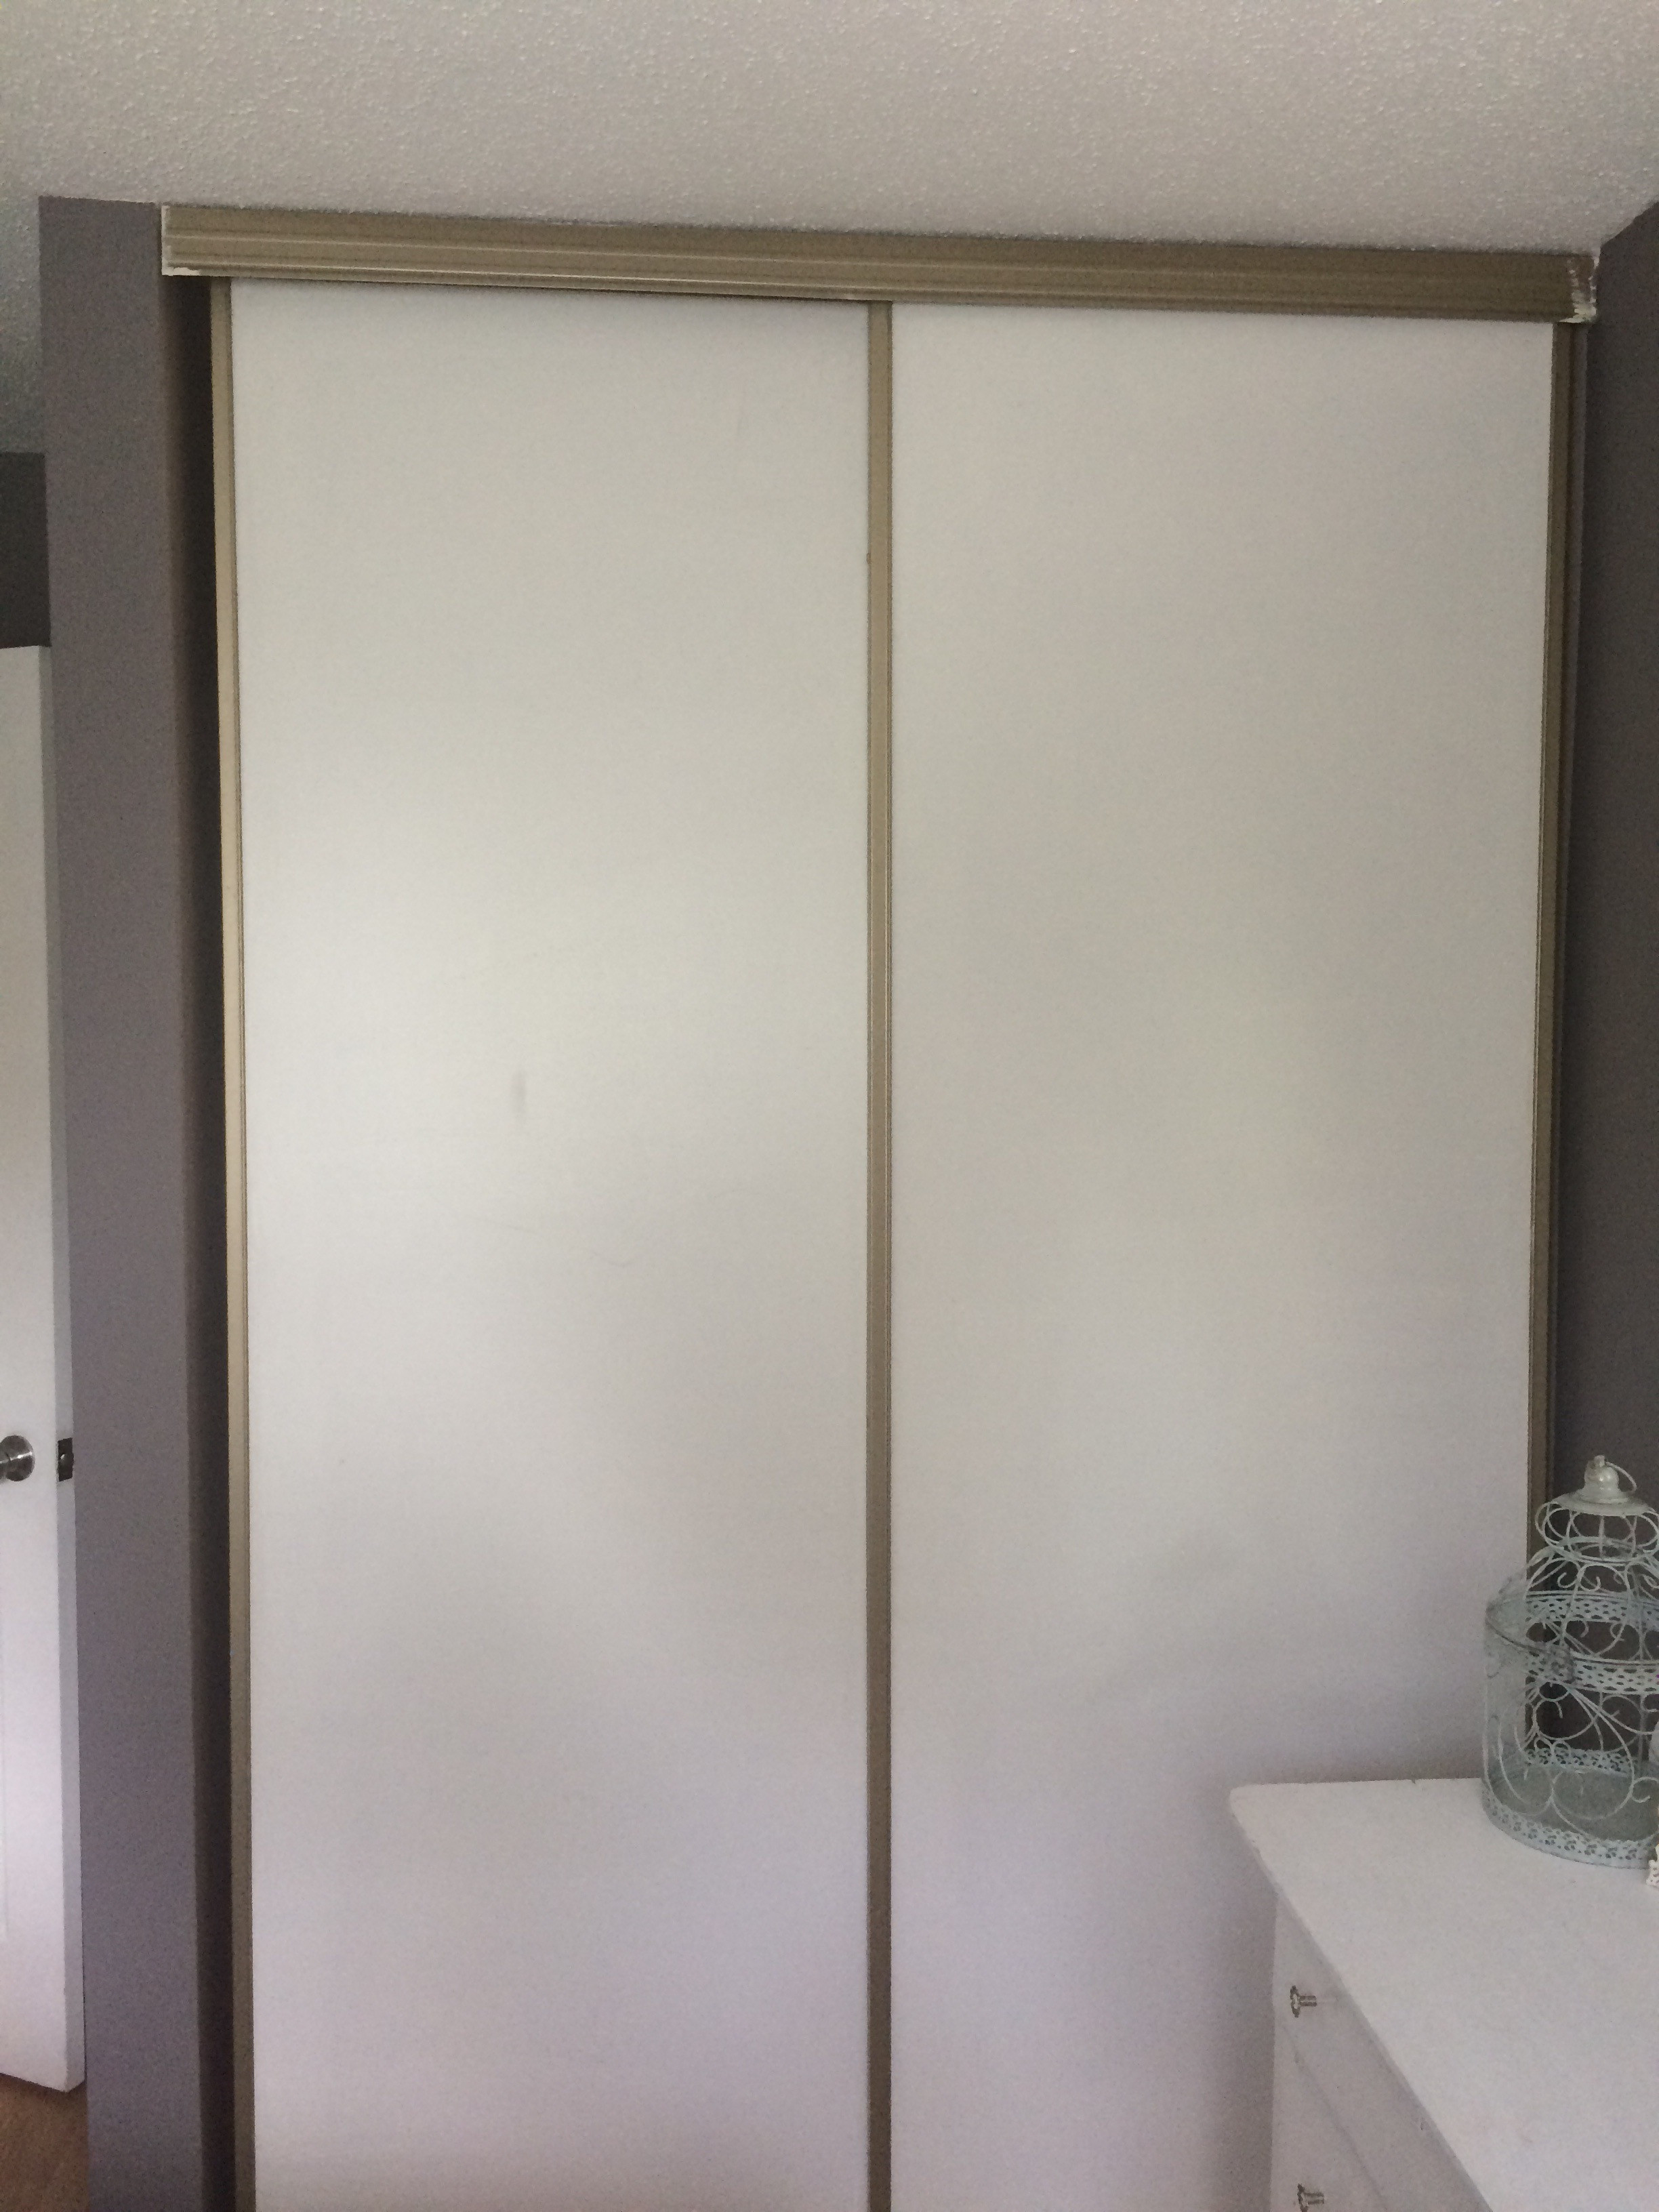 Best ideas about DIY Closet Doors
. Save or Pin DIY Sliding Closet Door Update – The Secret Life of M Now.